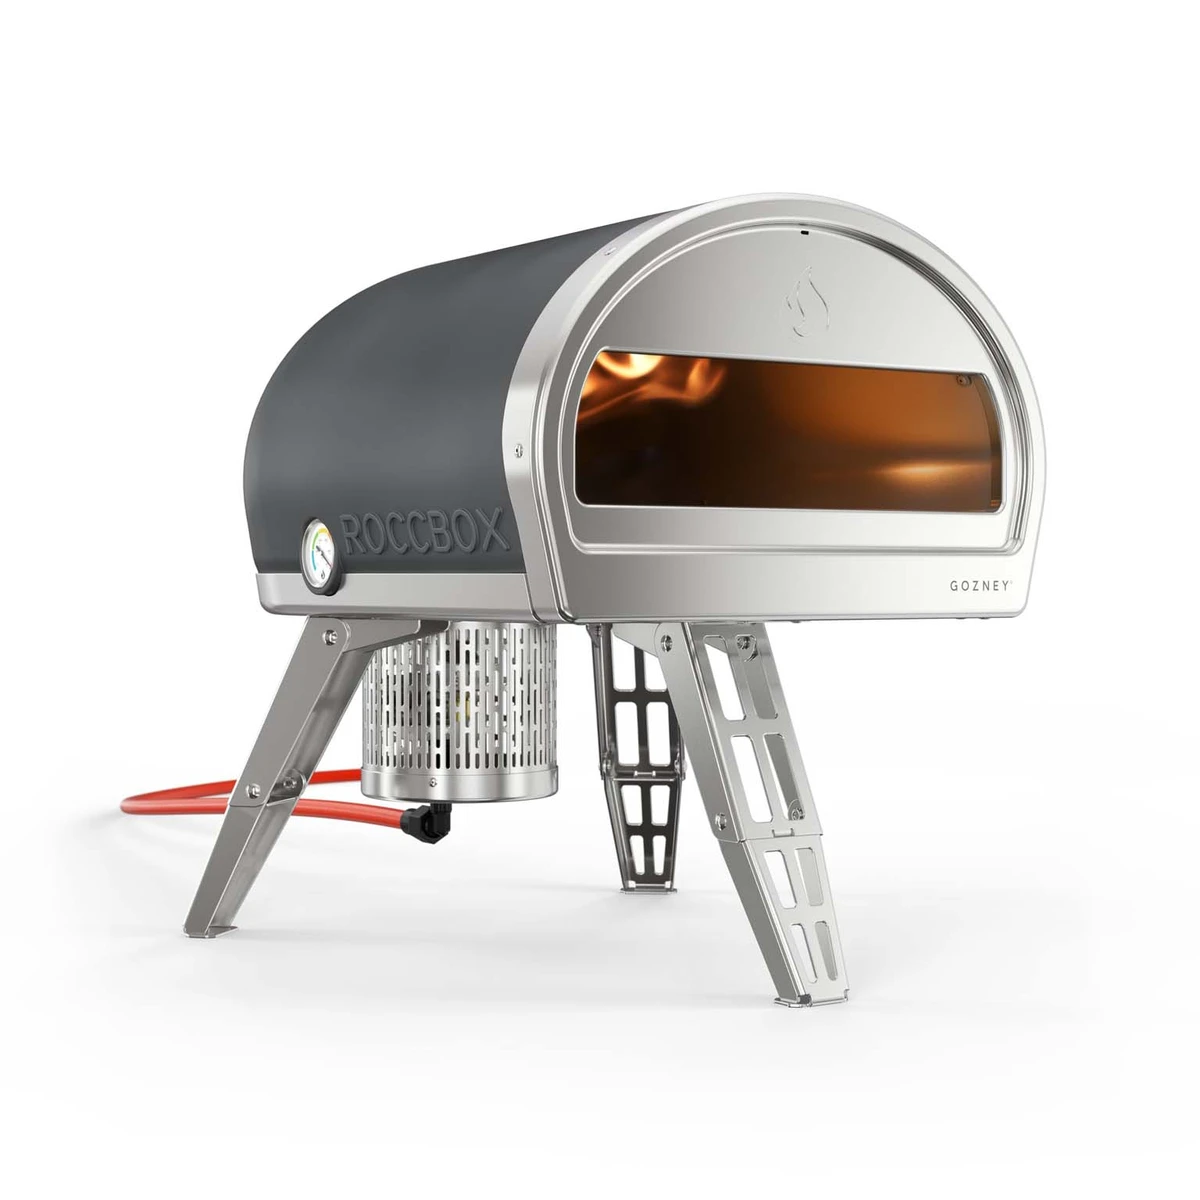 Roccbox Pizza Oven - Grey - image 1